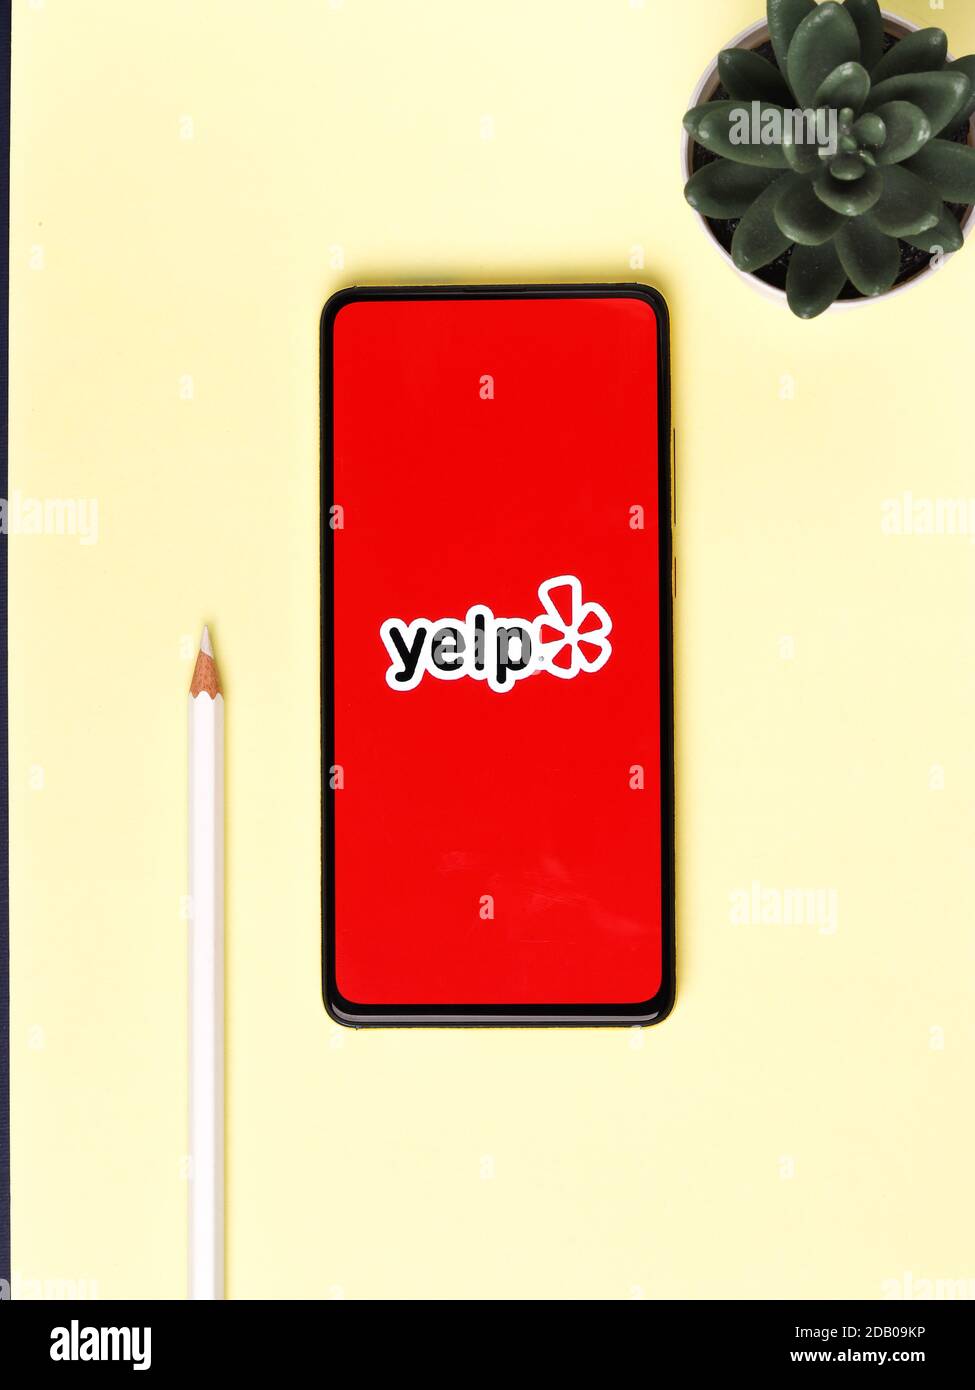 Assam, indien - November 15, 2020 : Yelp-Logo auf Handy-Bildschirm Stock Bild. Stockfoto